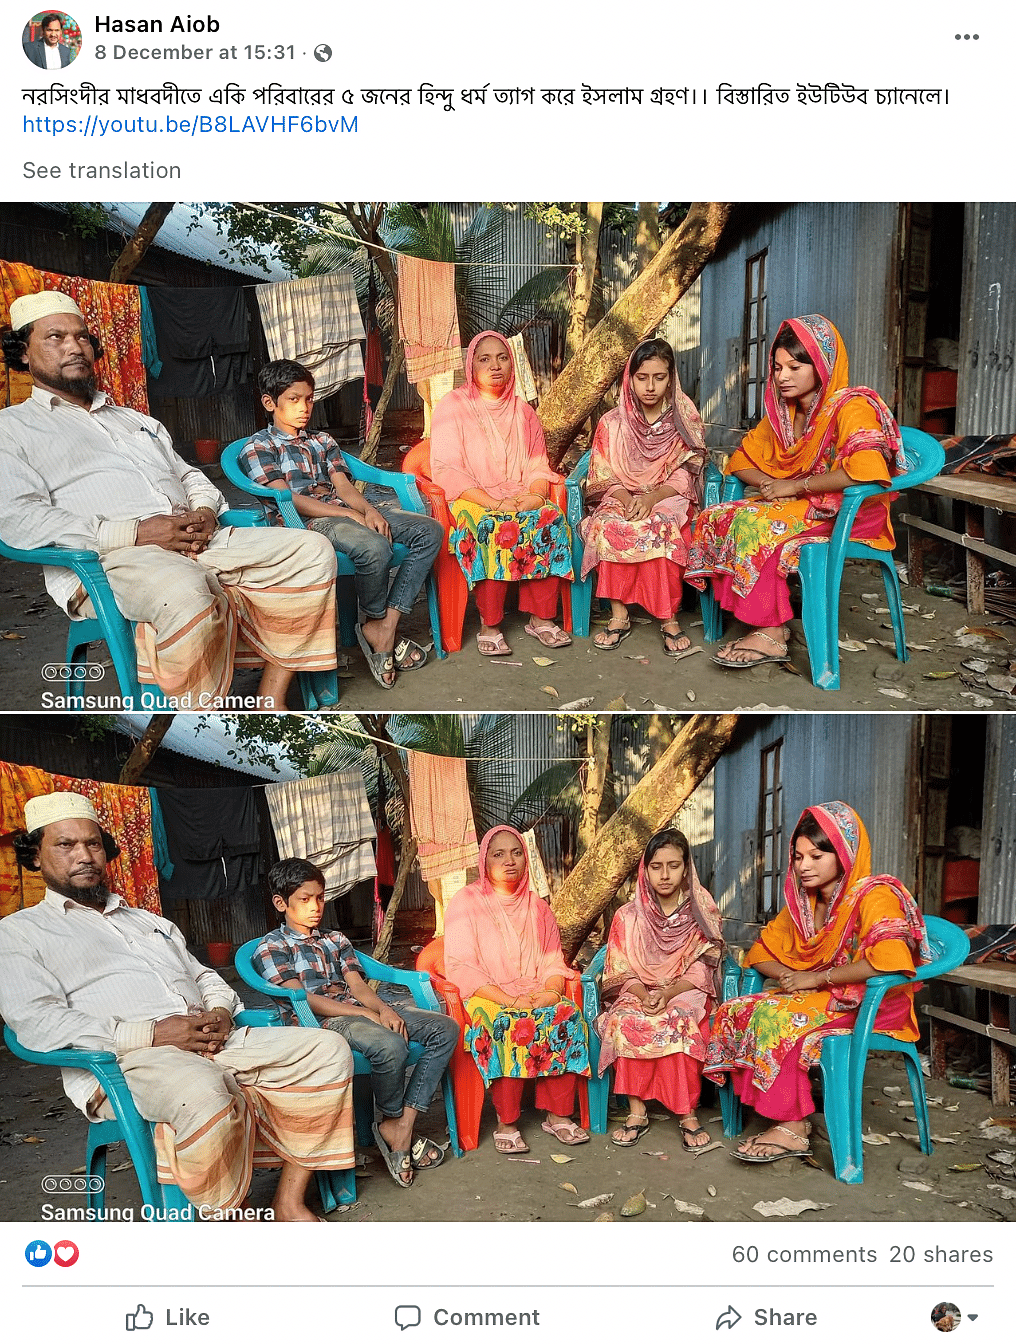 The photograph shows a family converting to Islam in Narsingdi, Bangladesh.